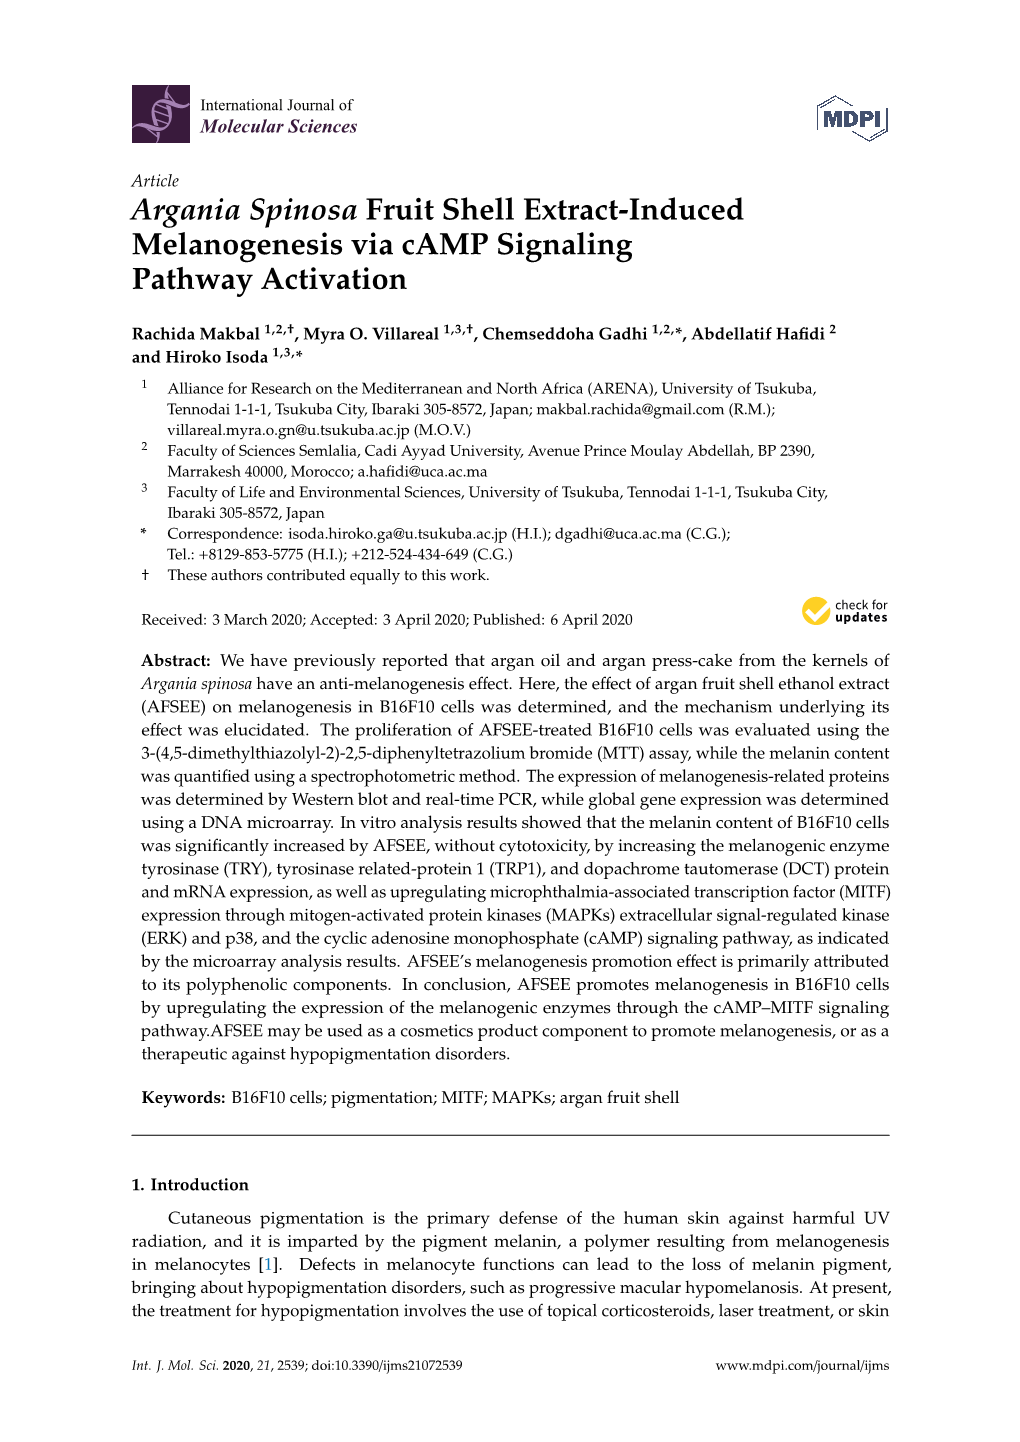 Argania Spinosa Fruit Shell Extract-Induced Melanogenesis Via Camp Signaling Pathway Activation